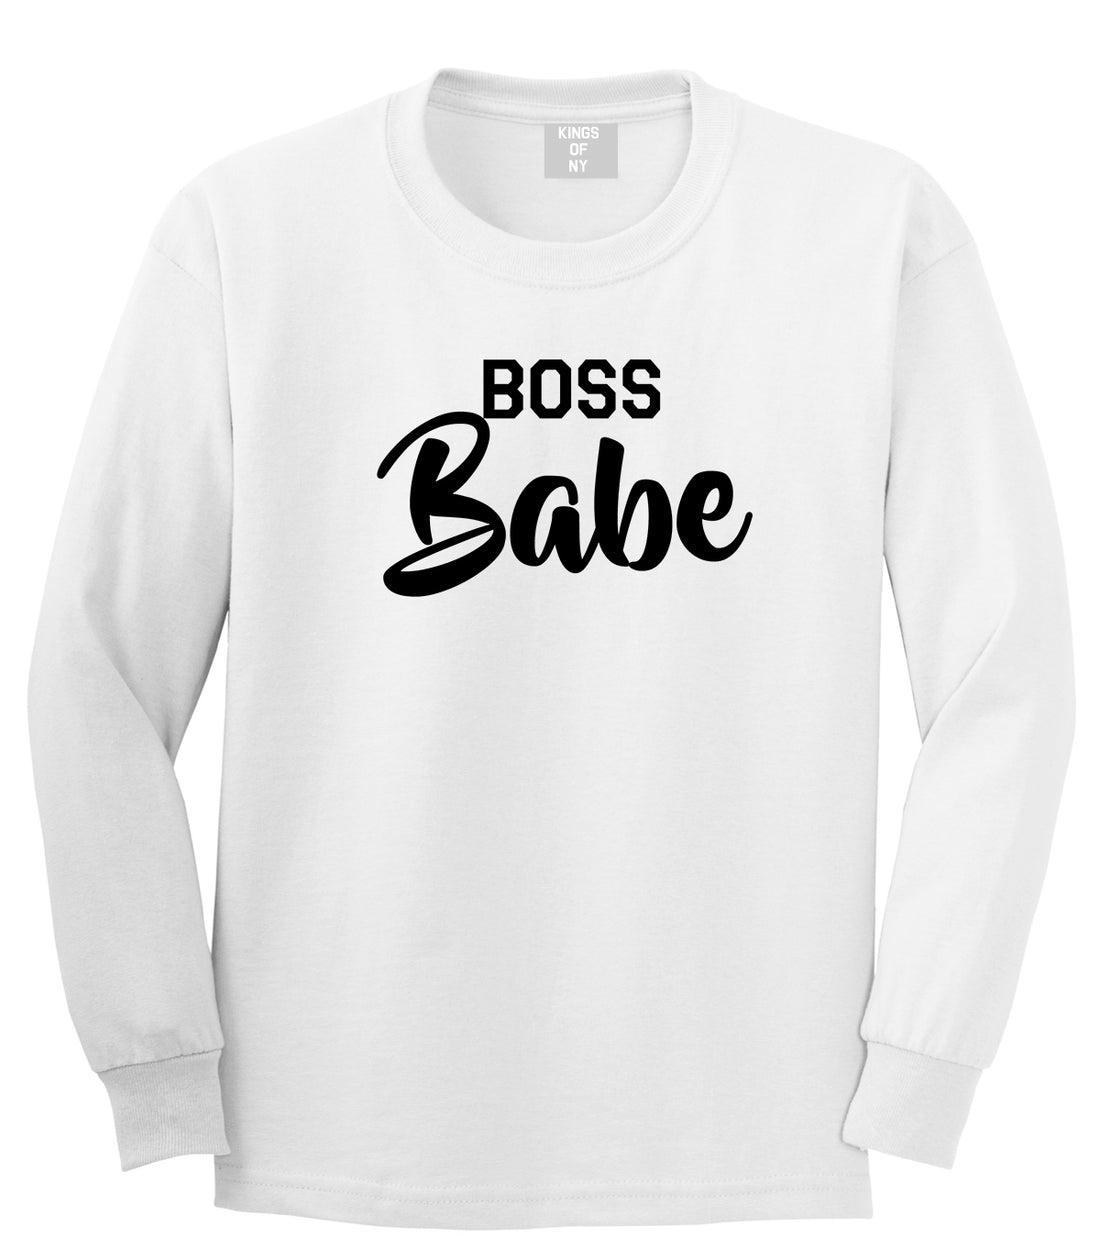 Boss Babe Mens White Long Sleeve T-Shirt by KINGS OF NY